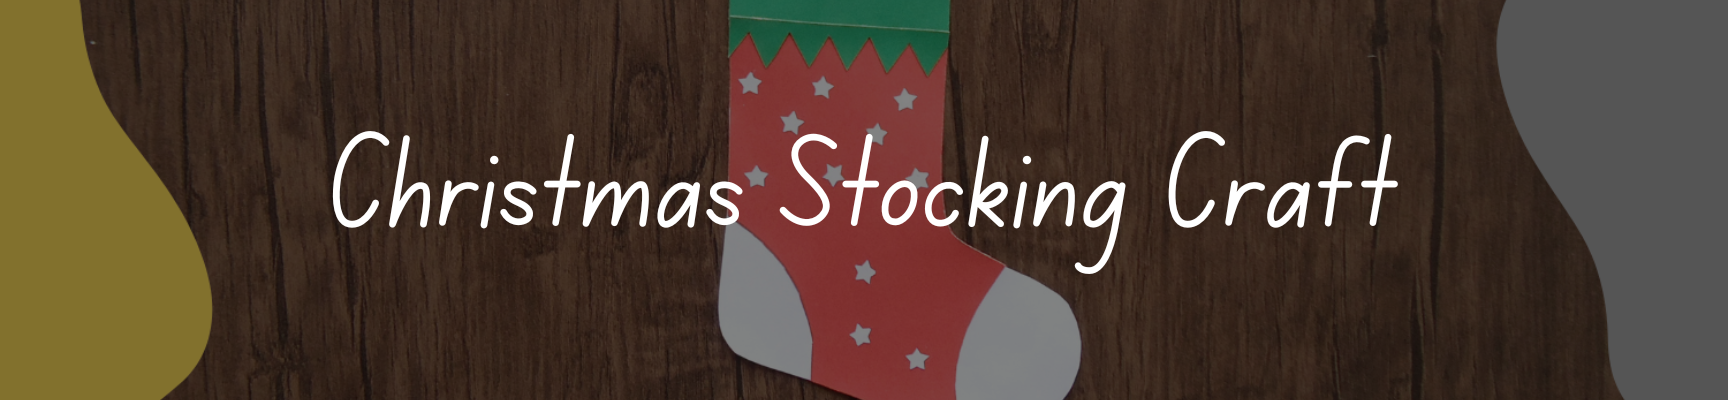 Christmas Stocking Art and Craft